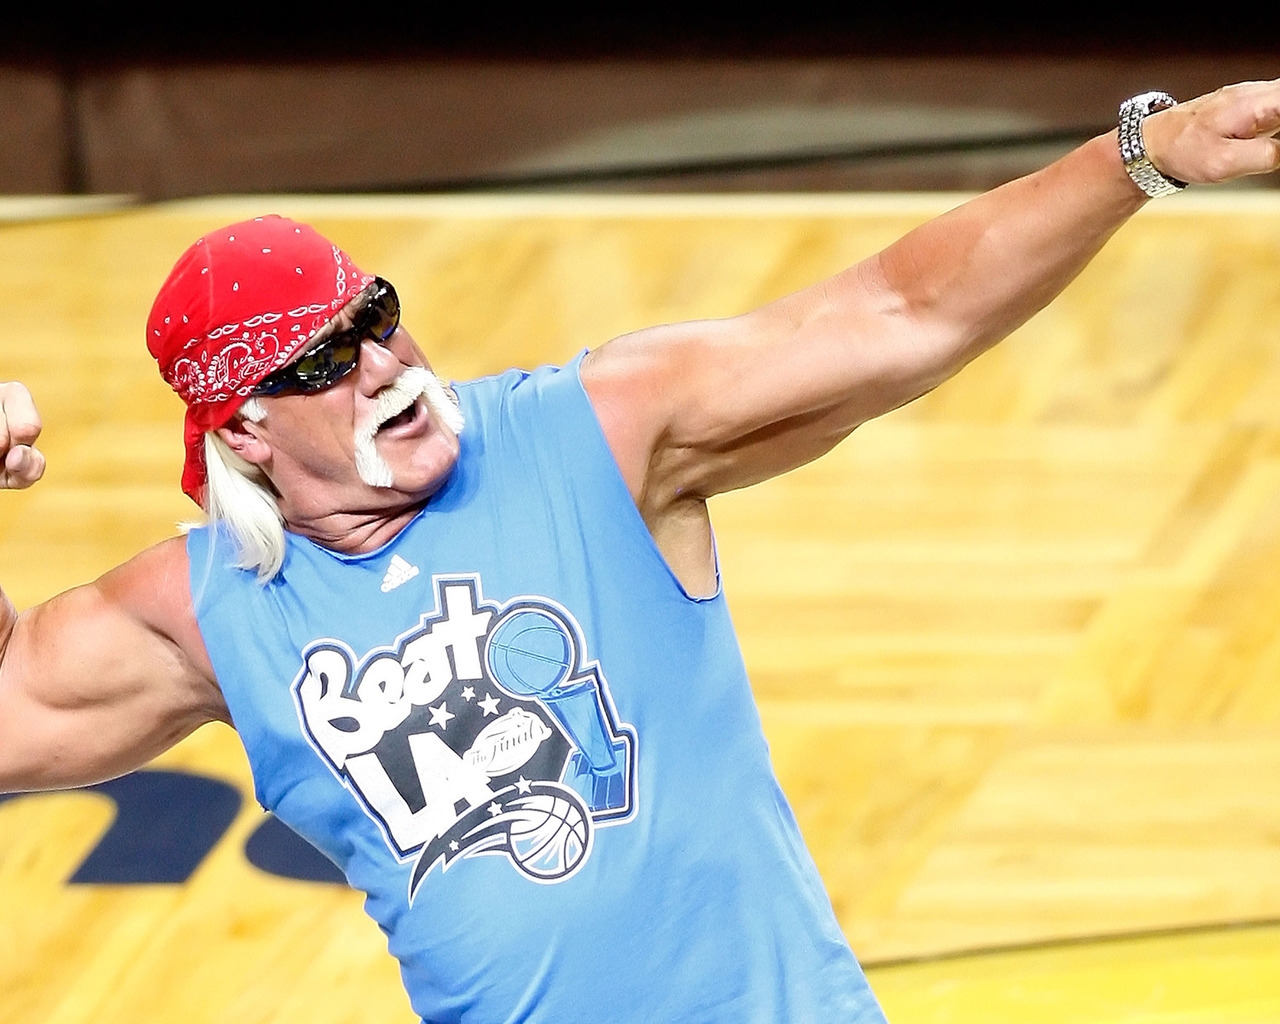 Hulk Hogan for 1280 x 1024 resolution